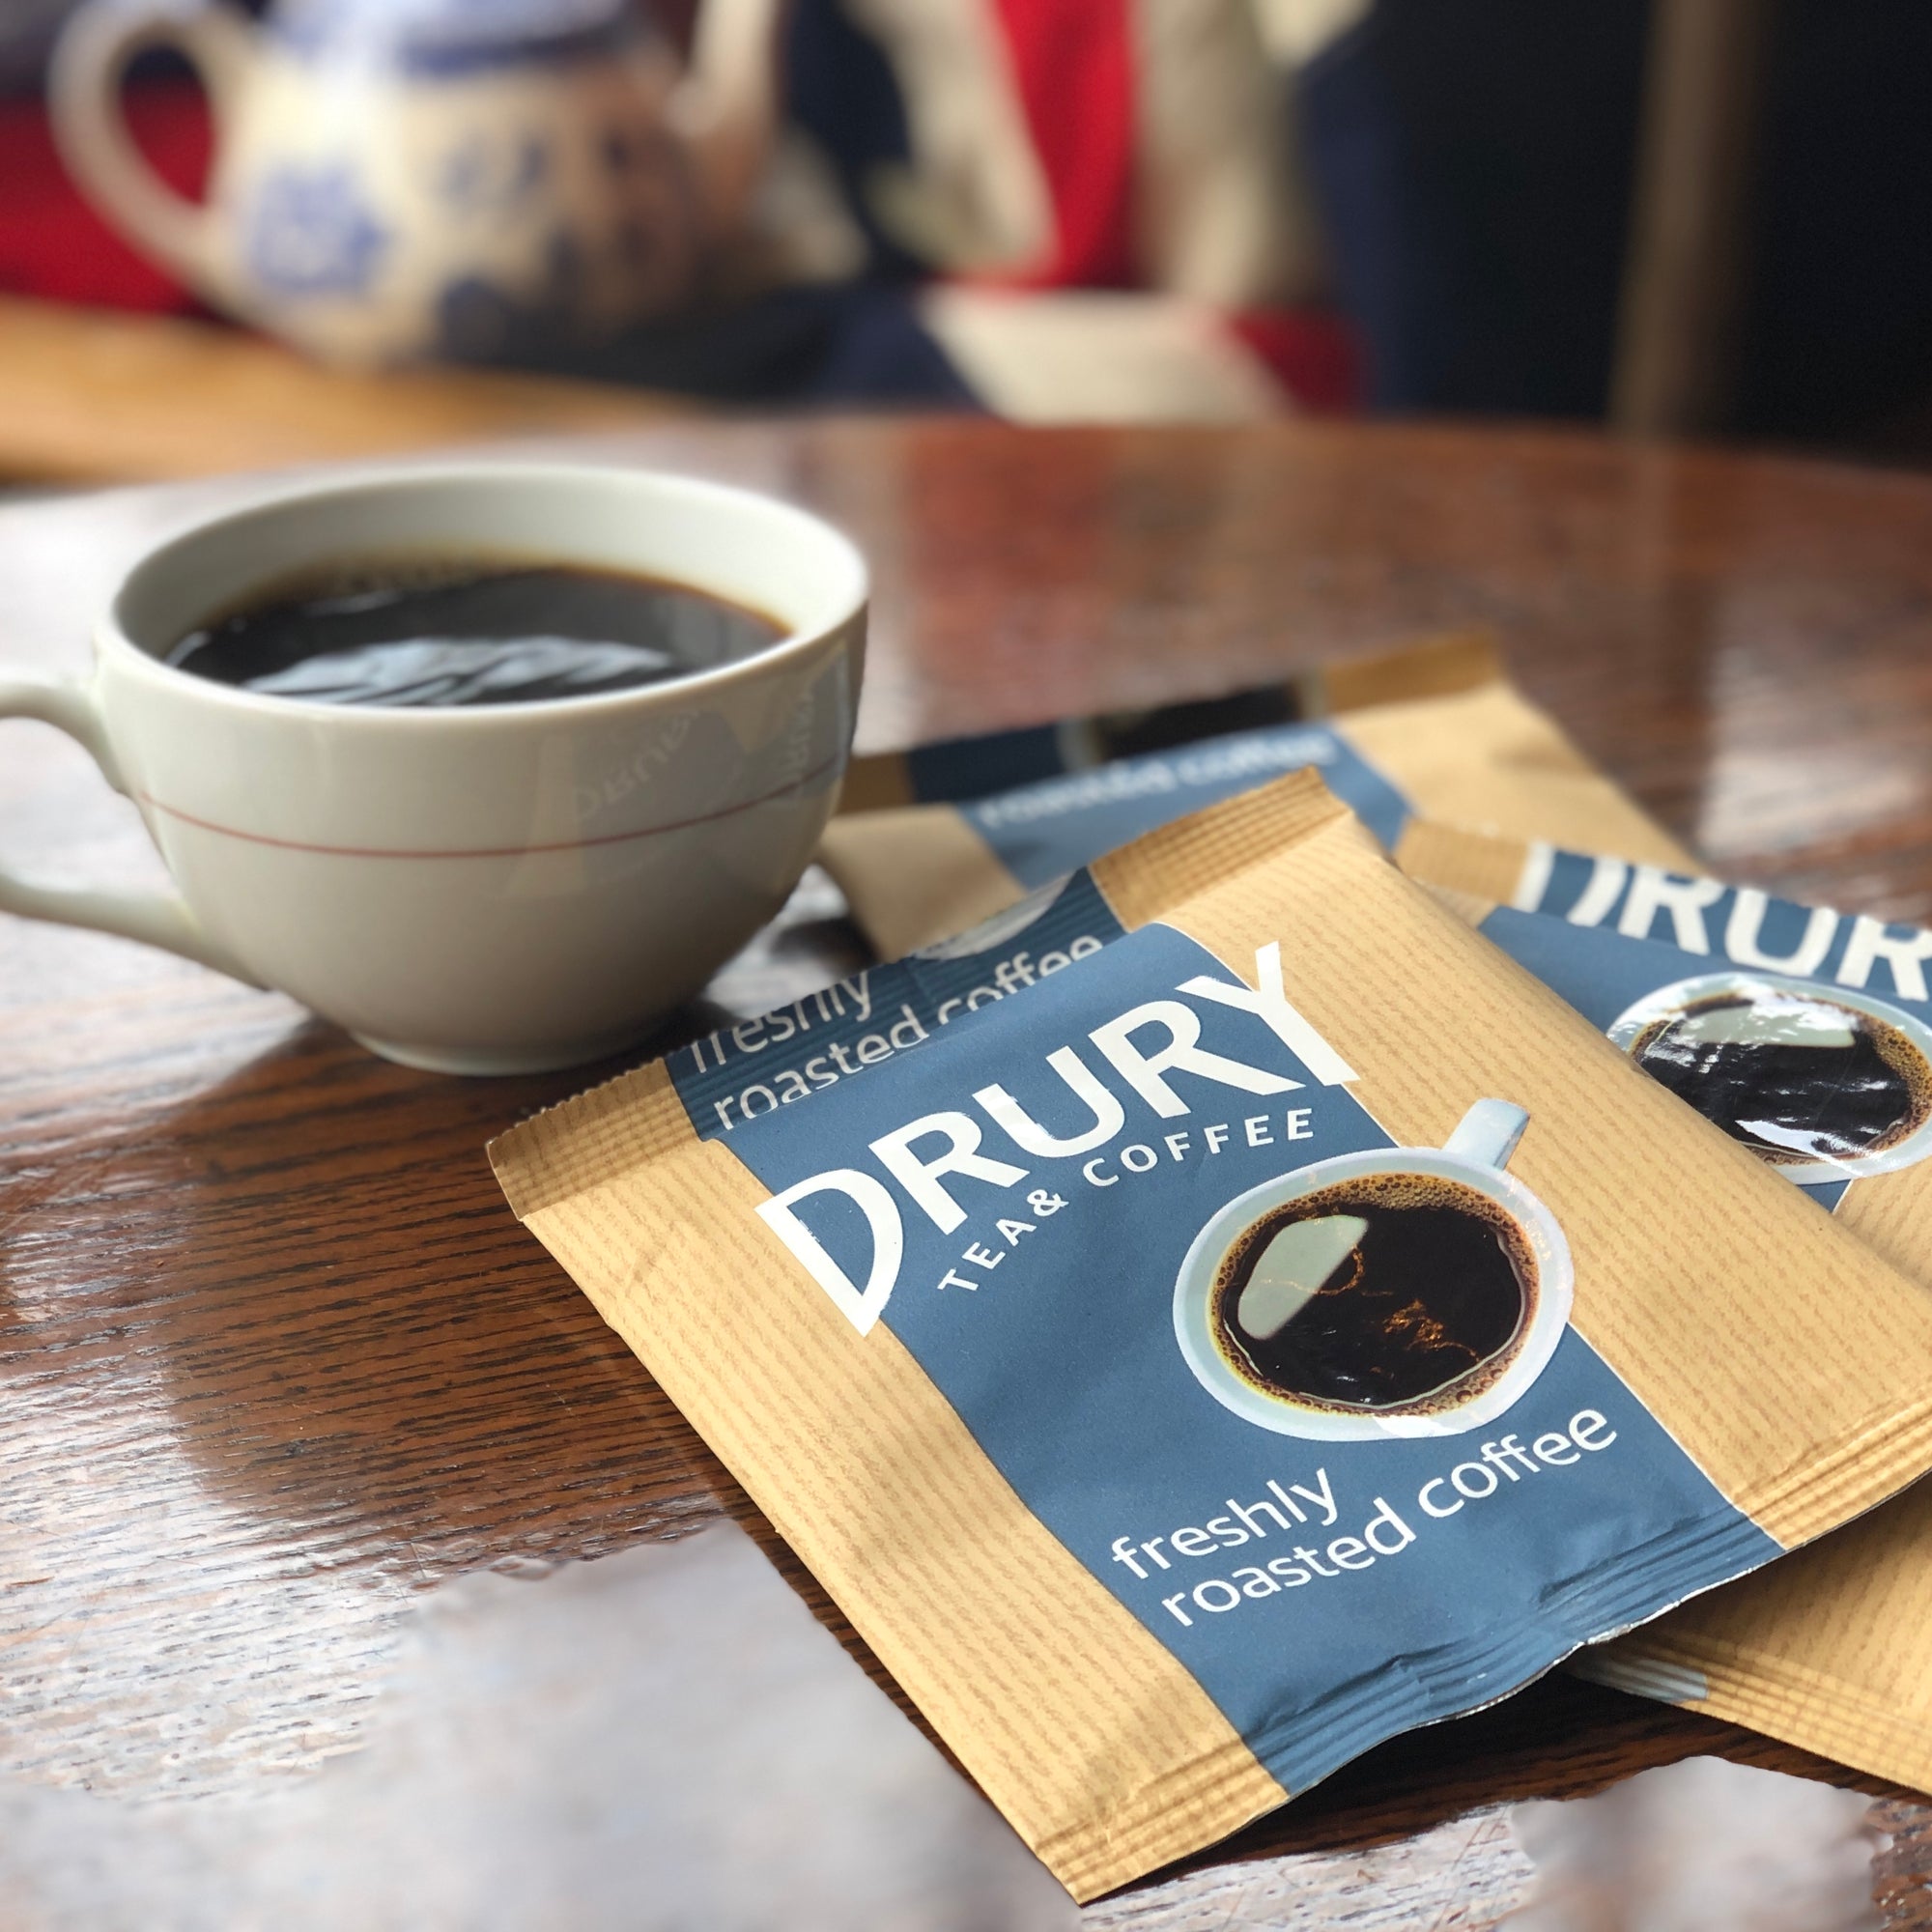 Drury Filter Coffee Sachet